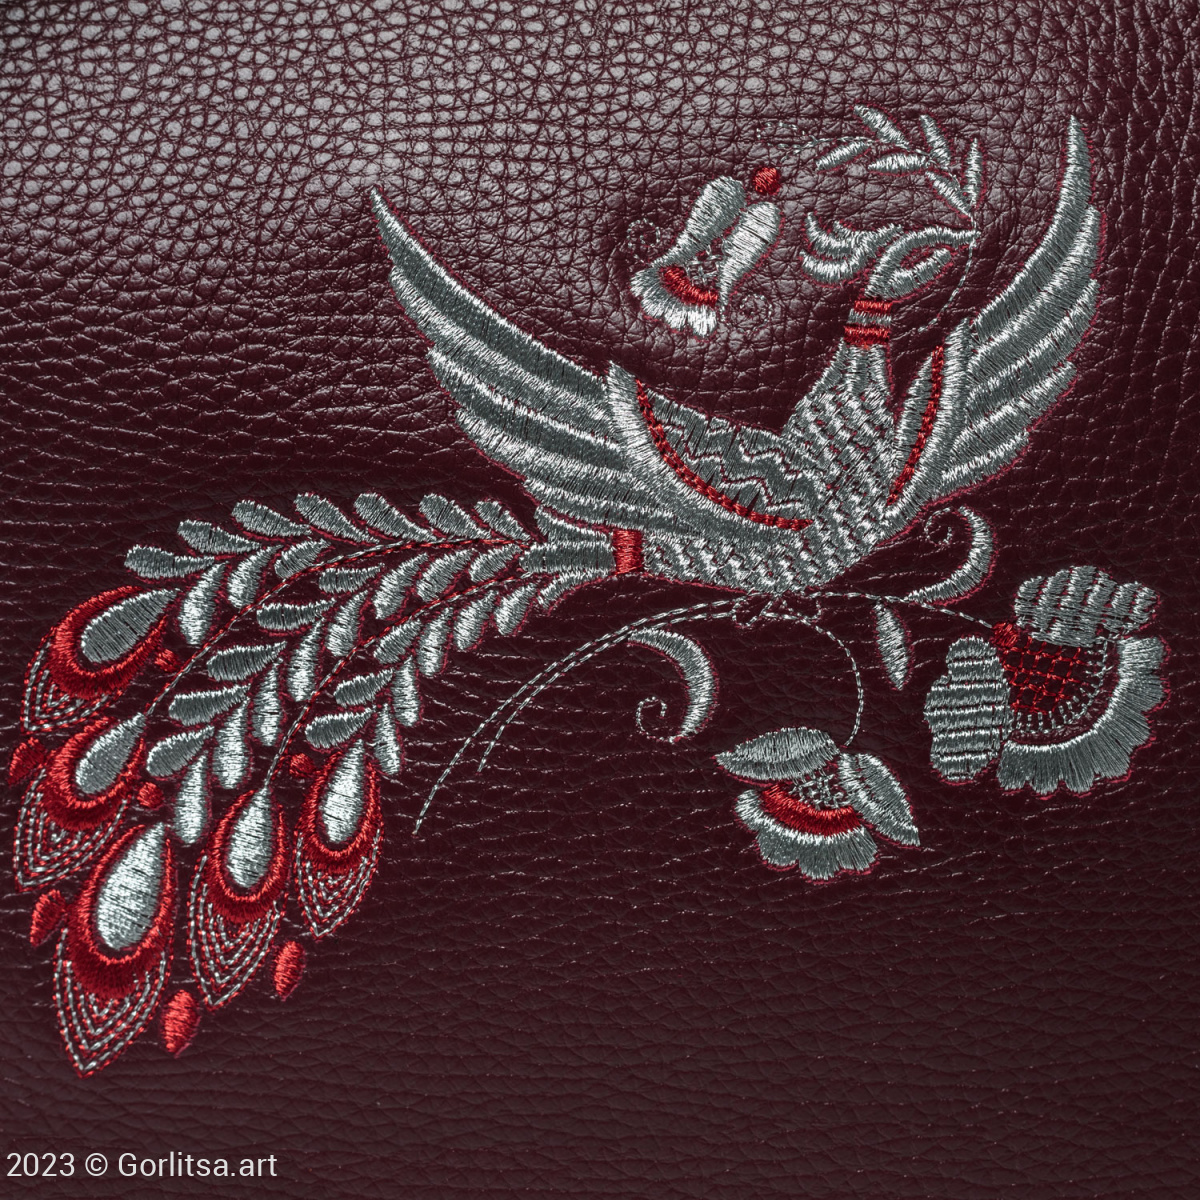 Сумка кожаная «Жар-птица» 489/25 бордовый/серебро нат. кожа Горлица-арт фото 3